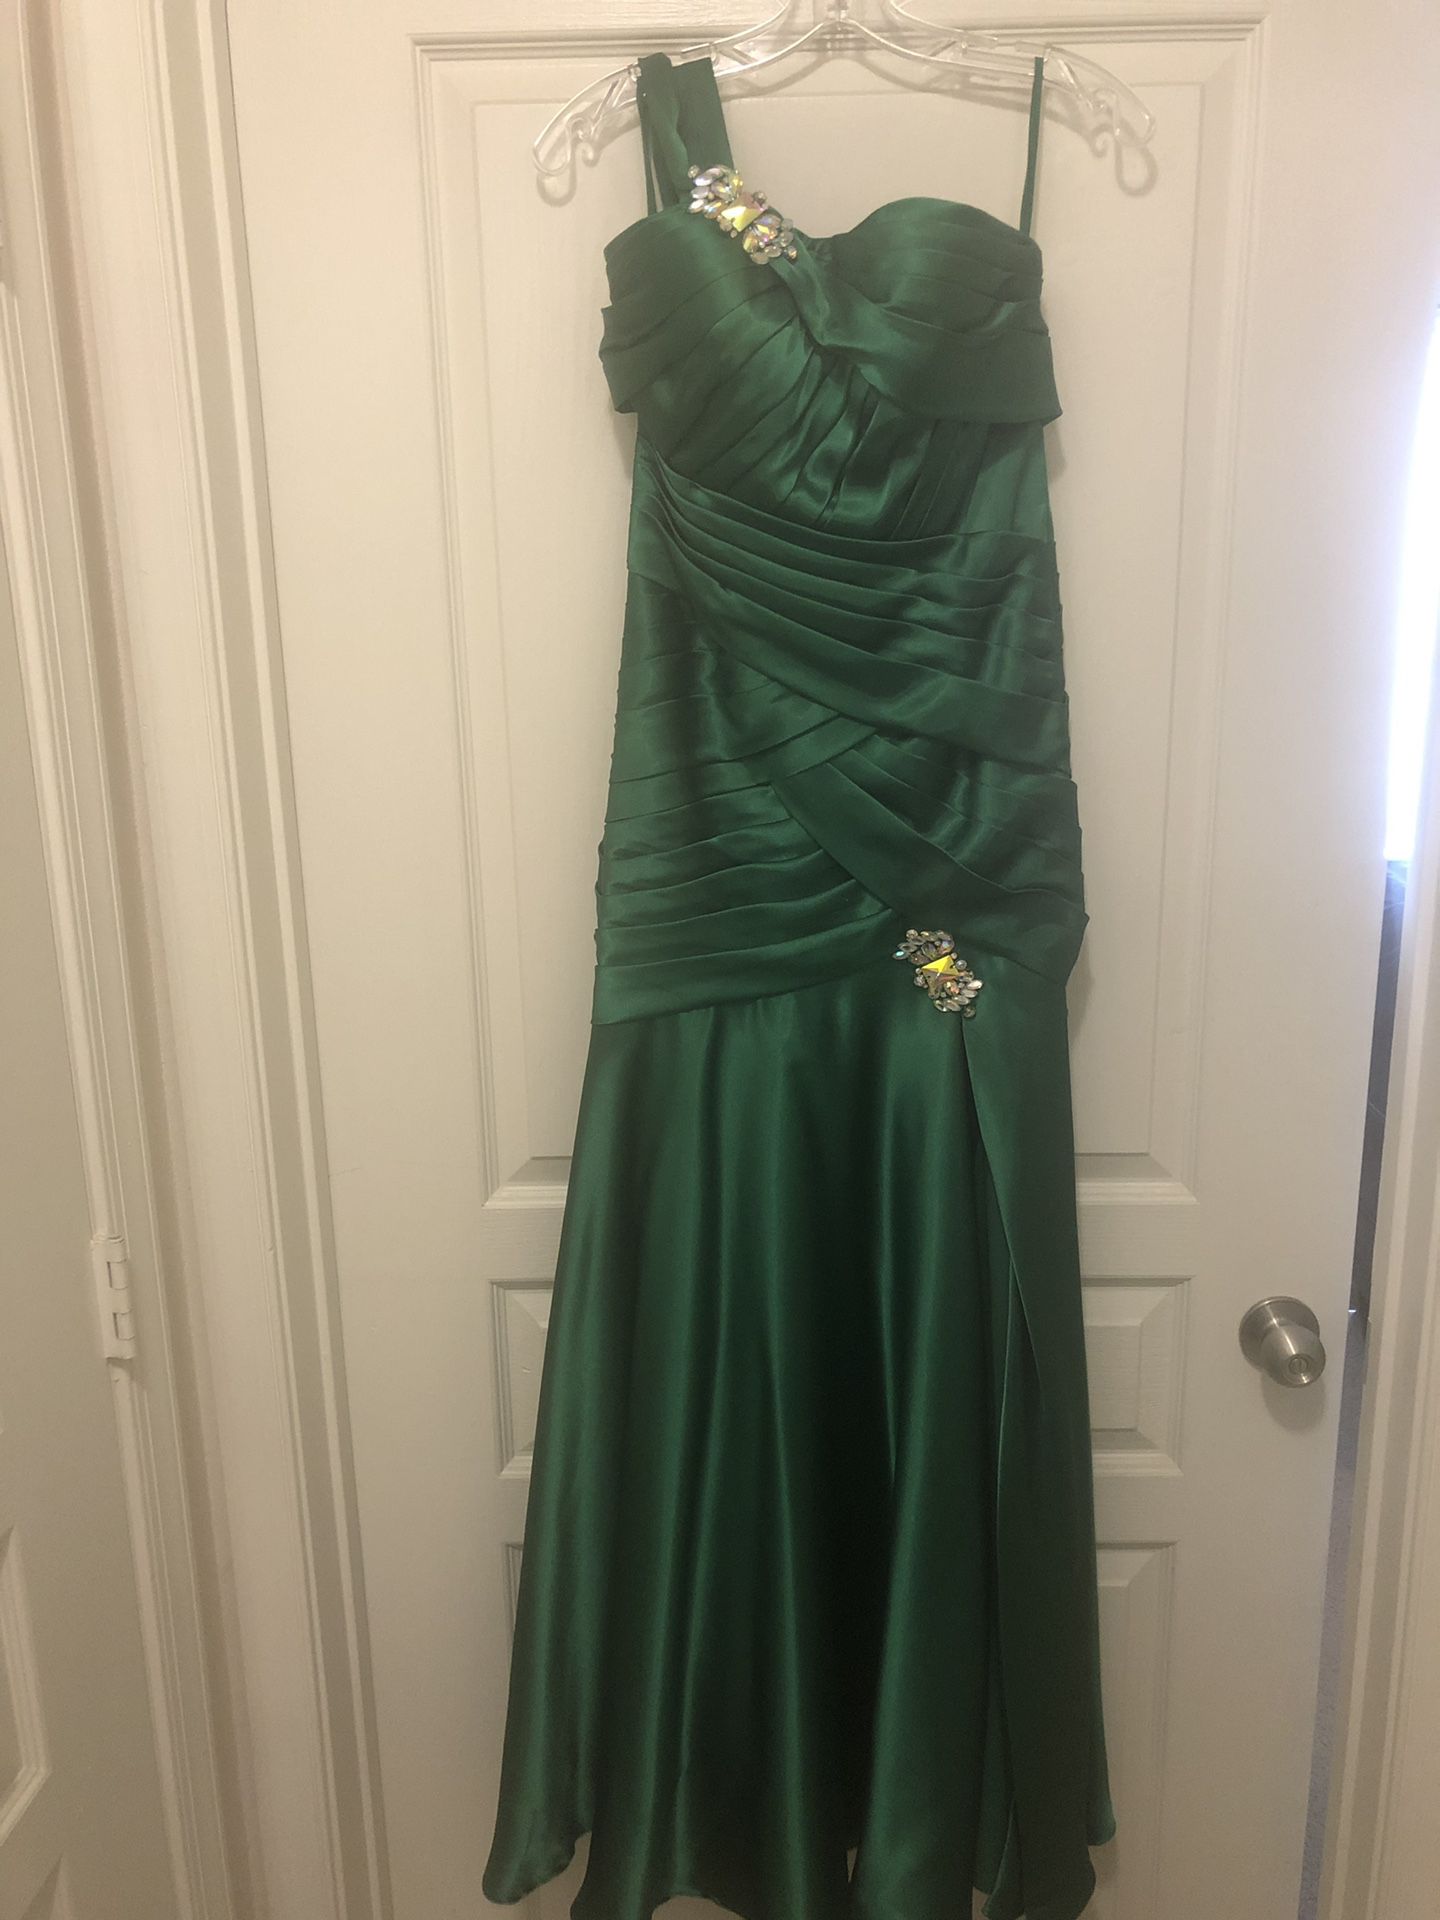 Emerald green formal dress